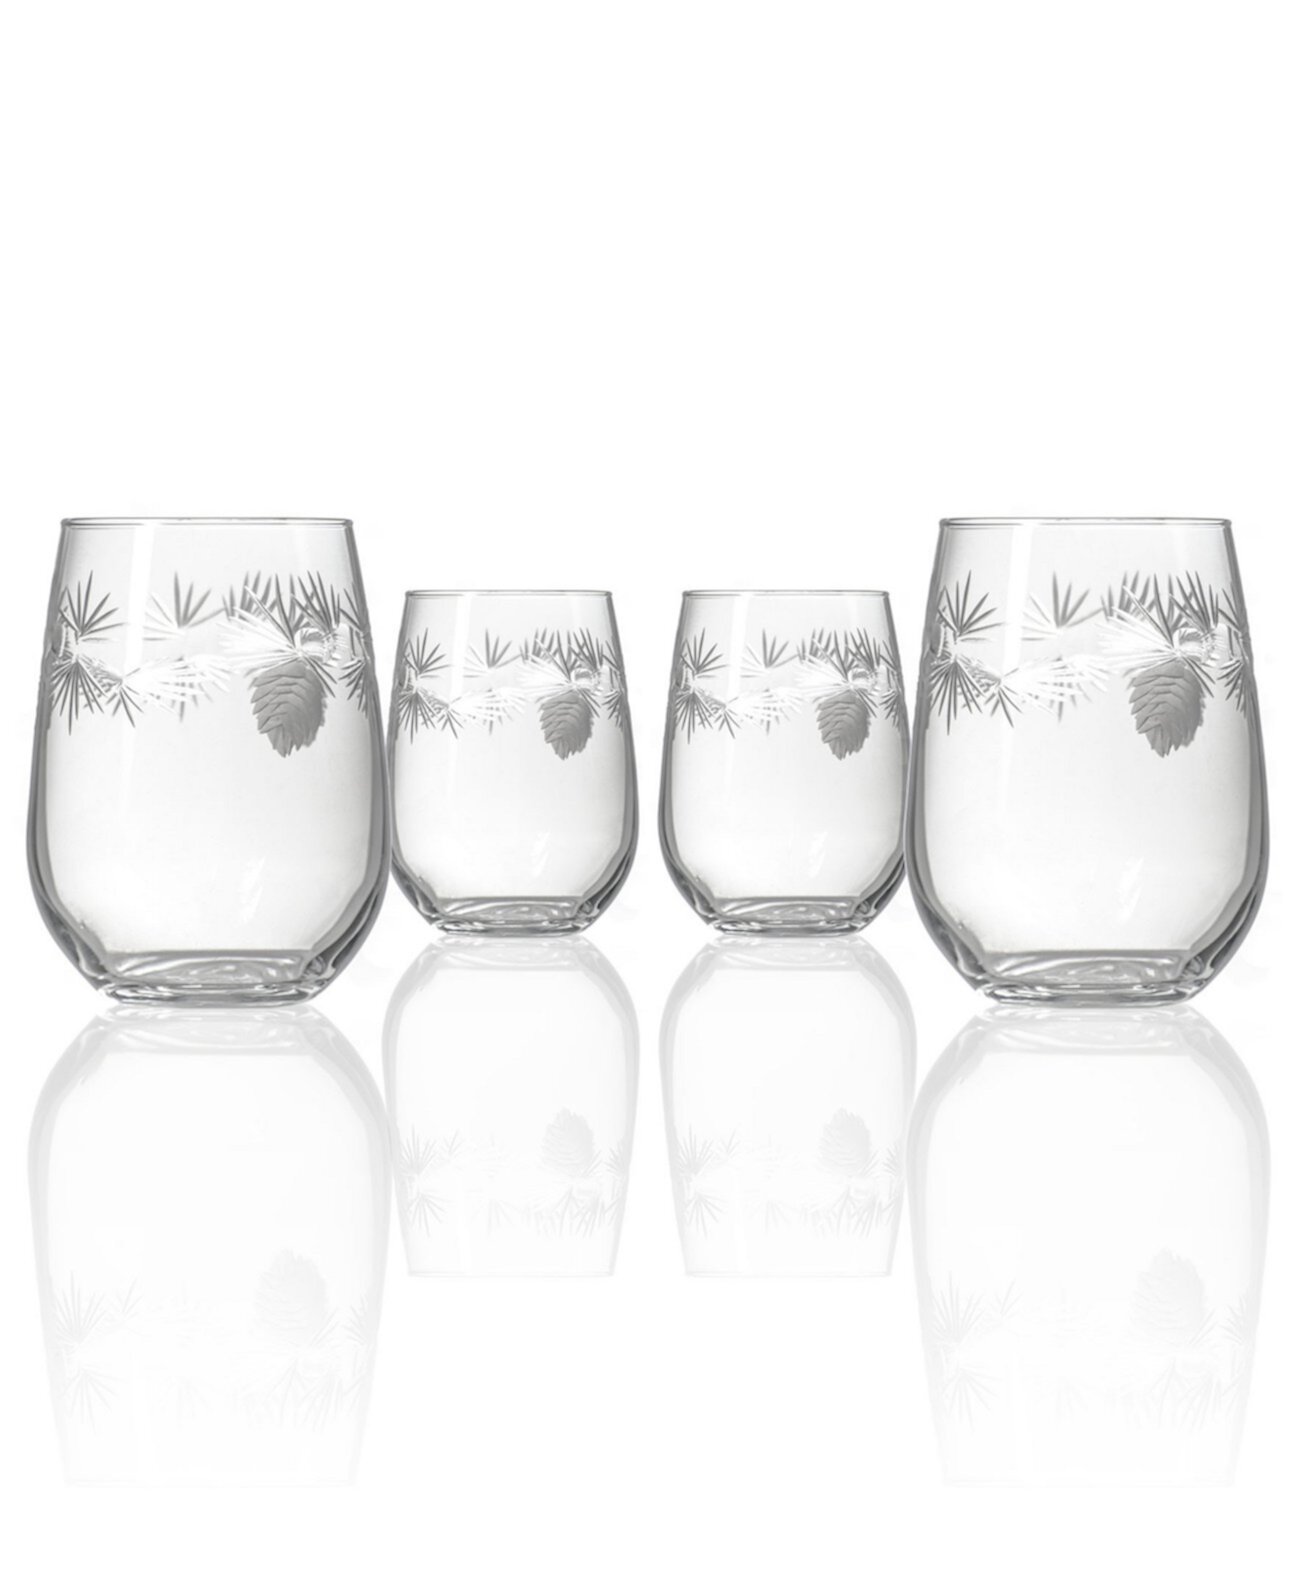 Icy Pine Stemless 17Oz - Набор из 4 стаканов Rolf Glass